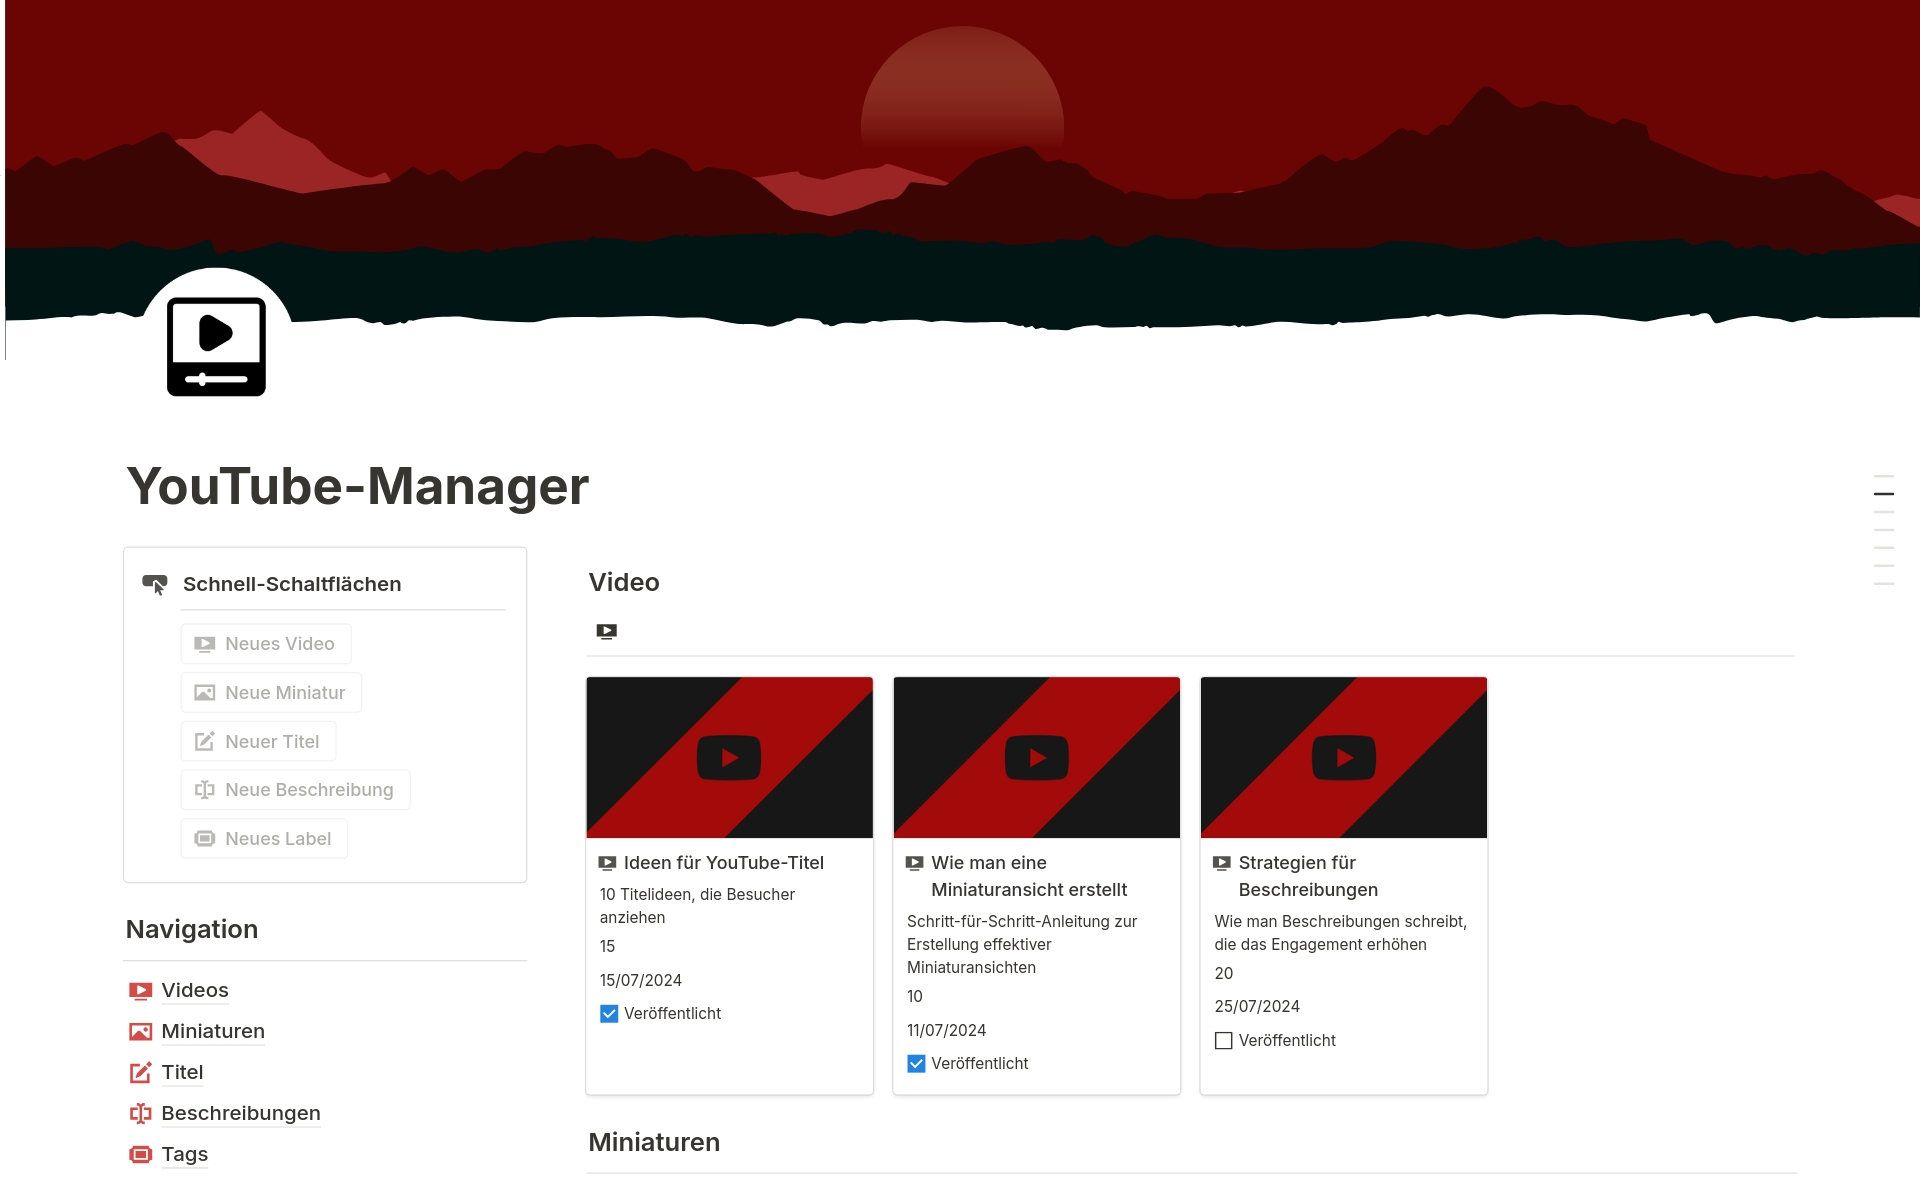 Vista previa de una plantilla para YouTube-Manager